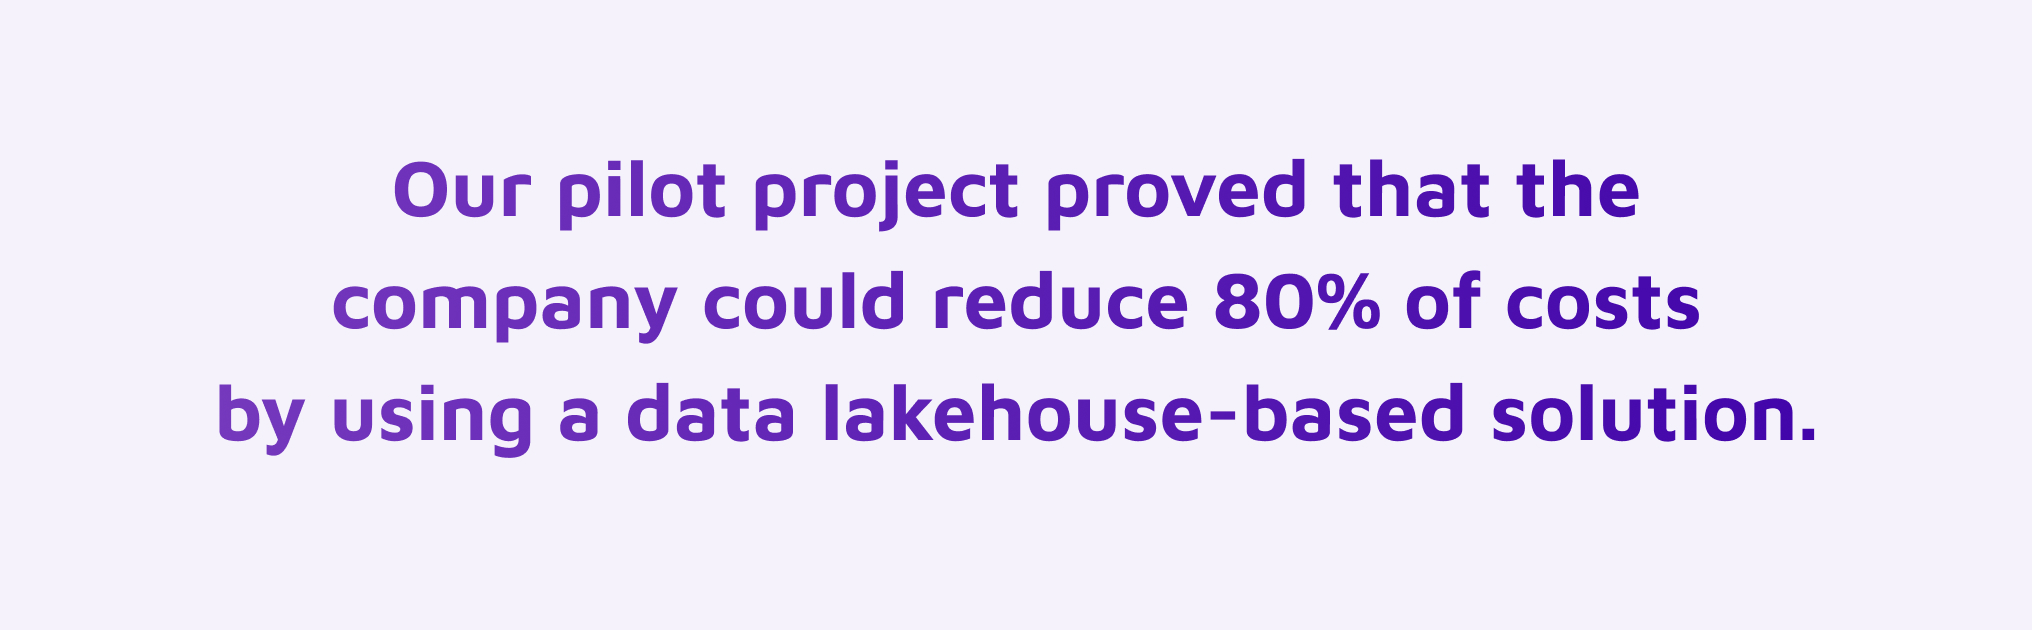 data lakehouse-based solution